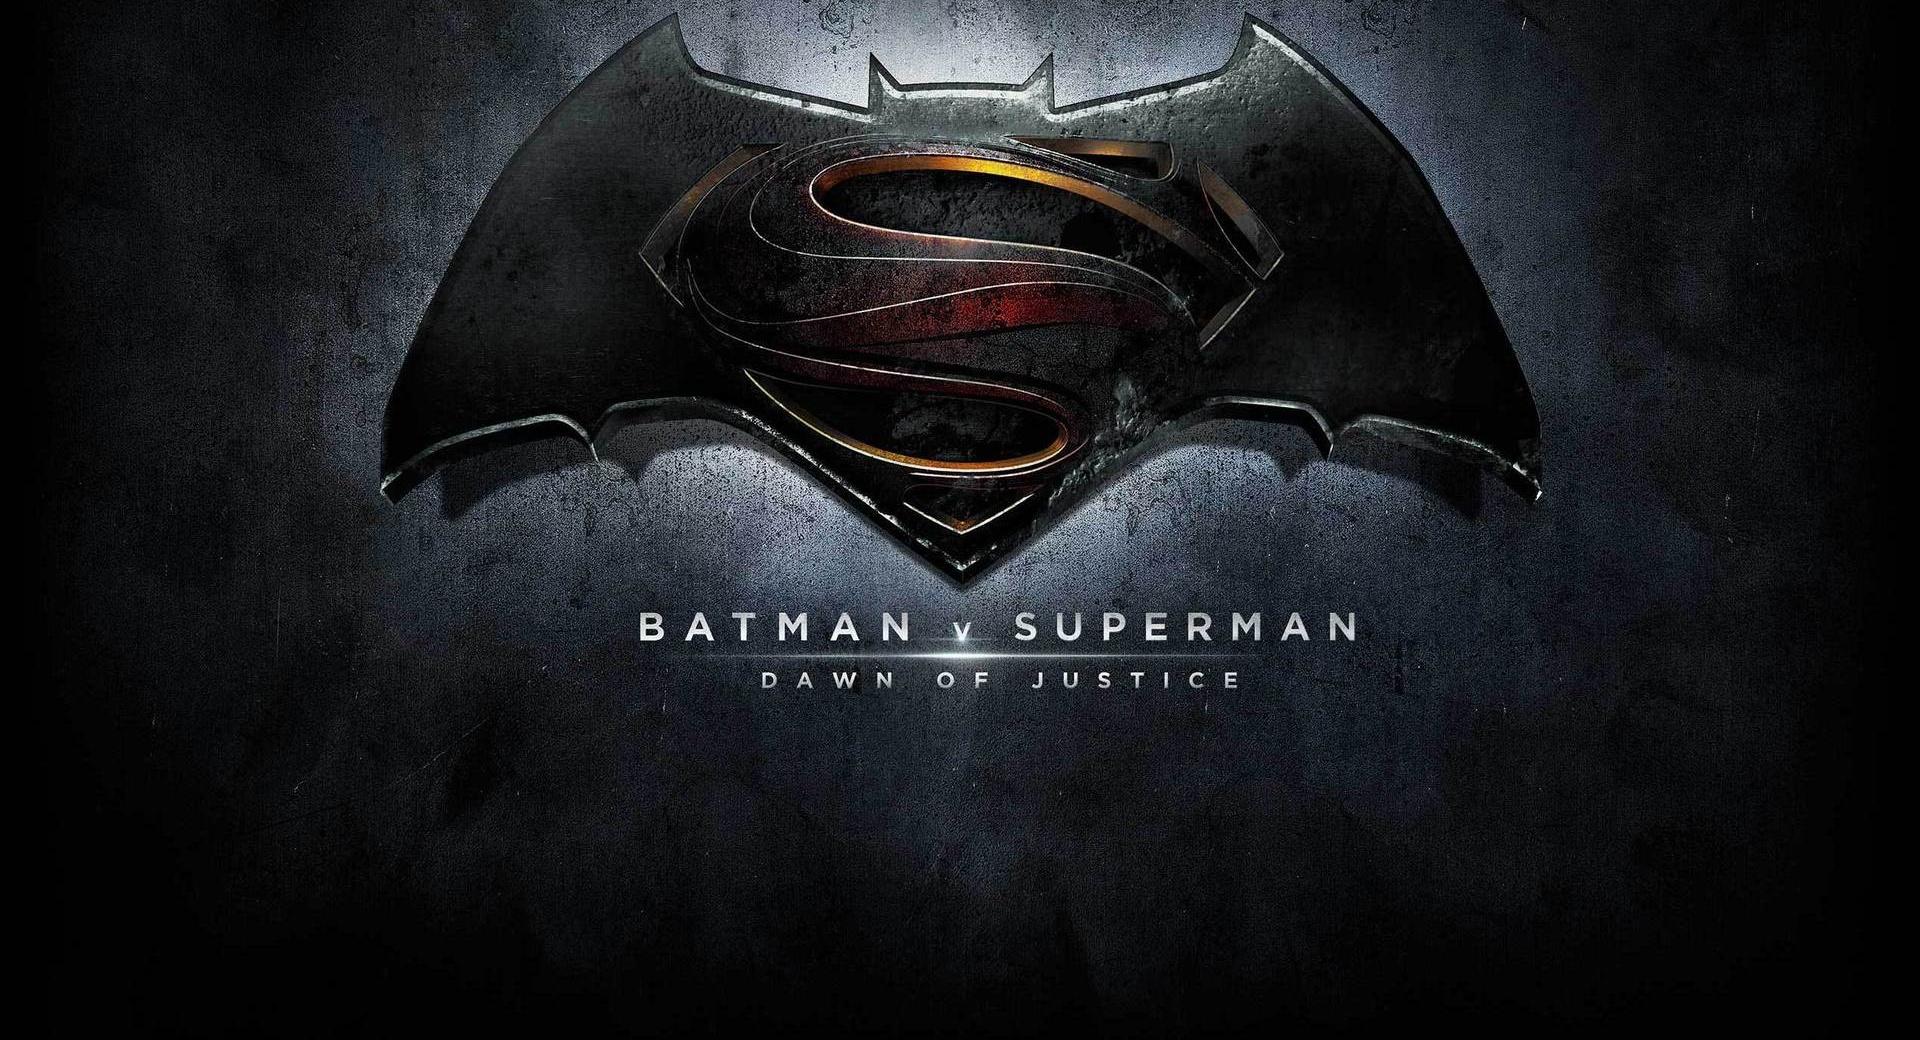 Batman VS Superman Logo at 1280 x 960 size wallpapers HD quality